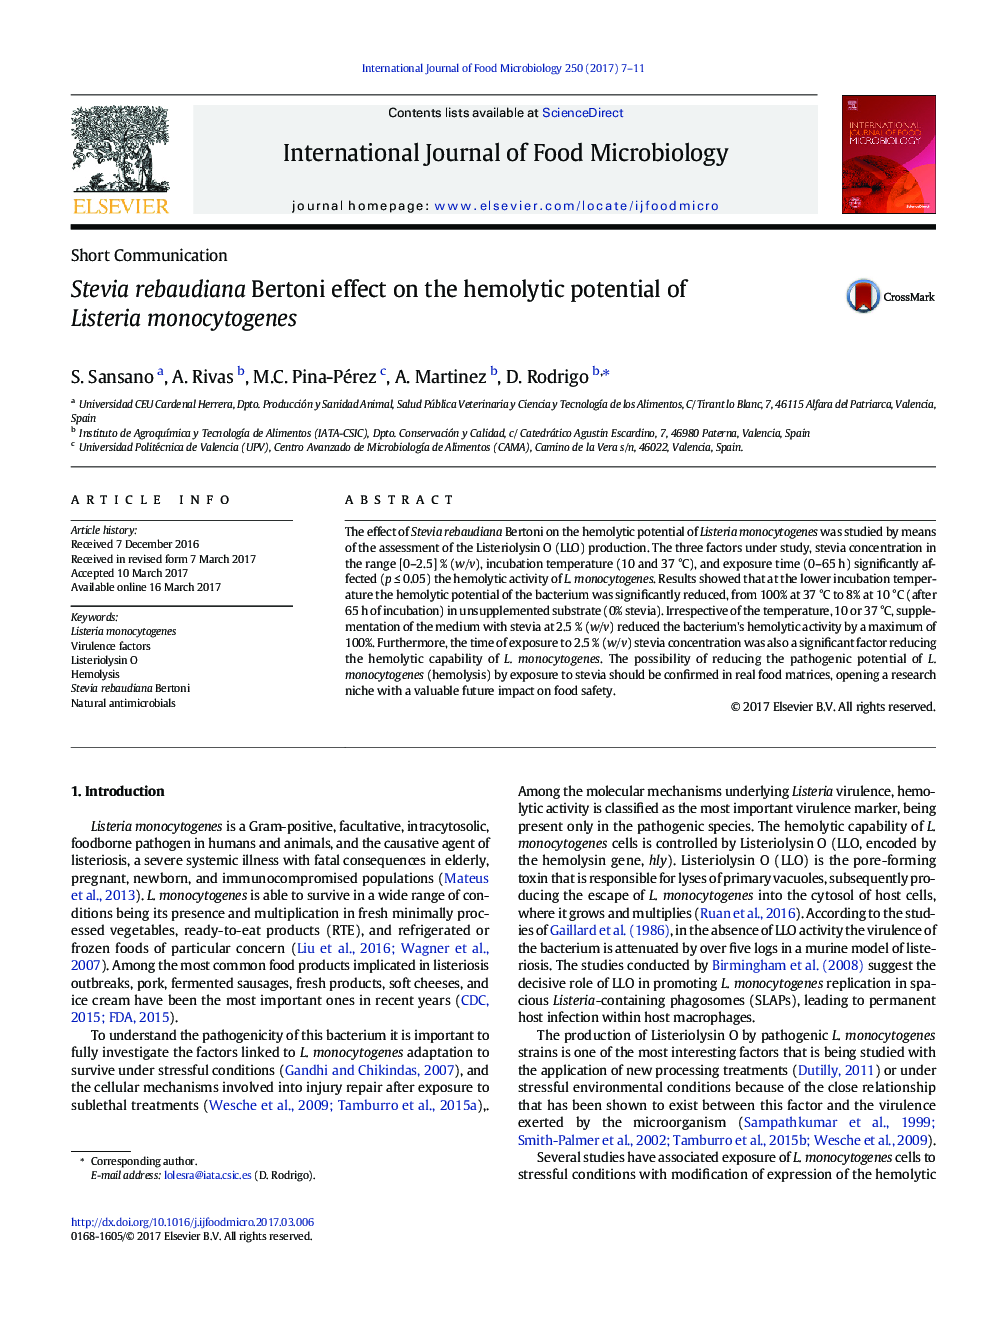 Short CommunicationStevia rebaudiana Bertoni effect on the hemolytic potential of Listeria monocytogenes